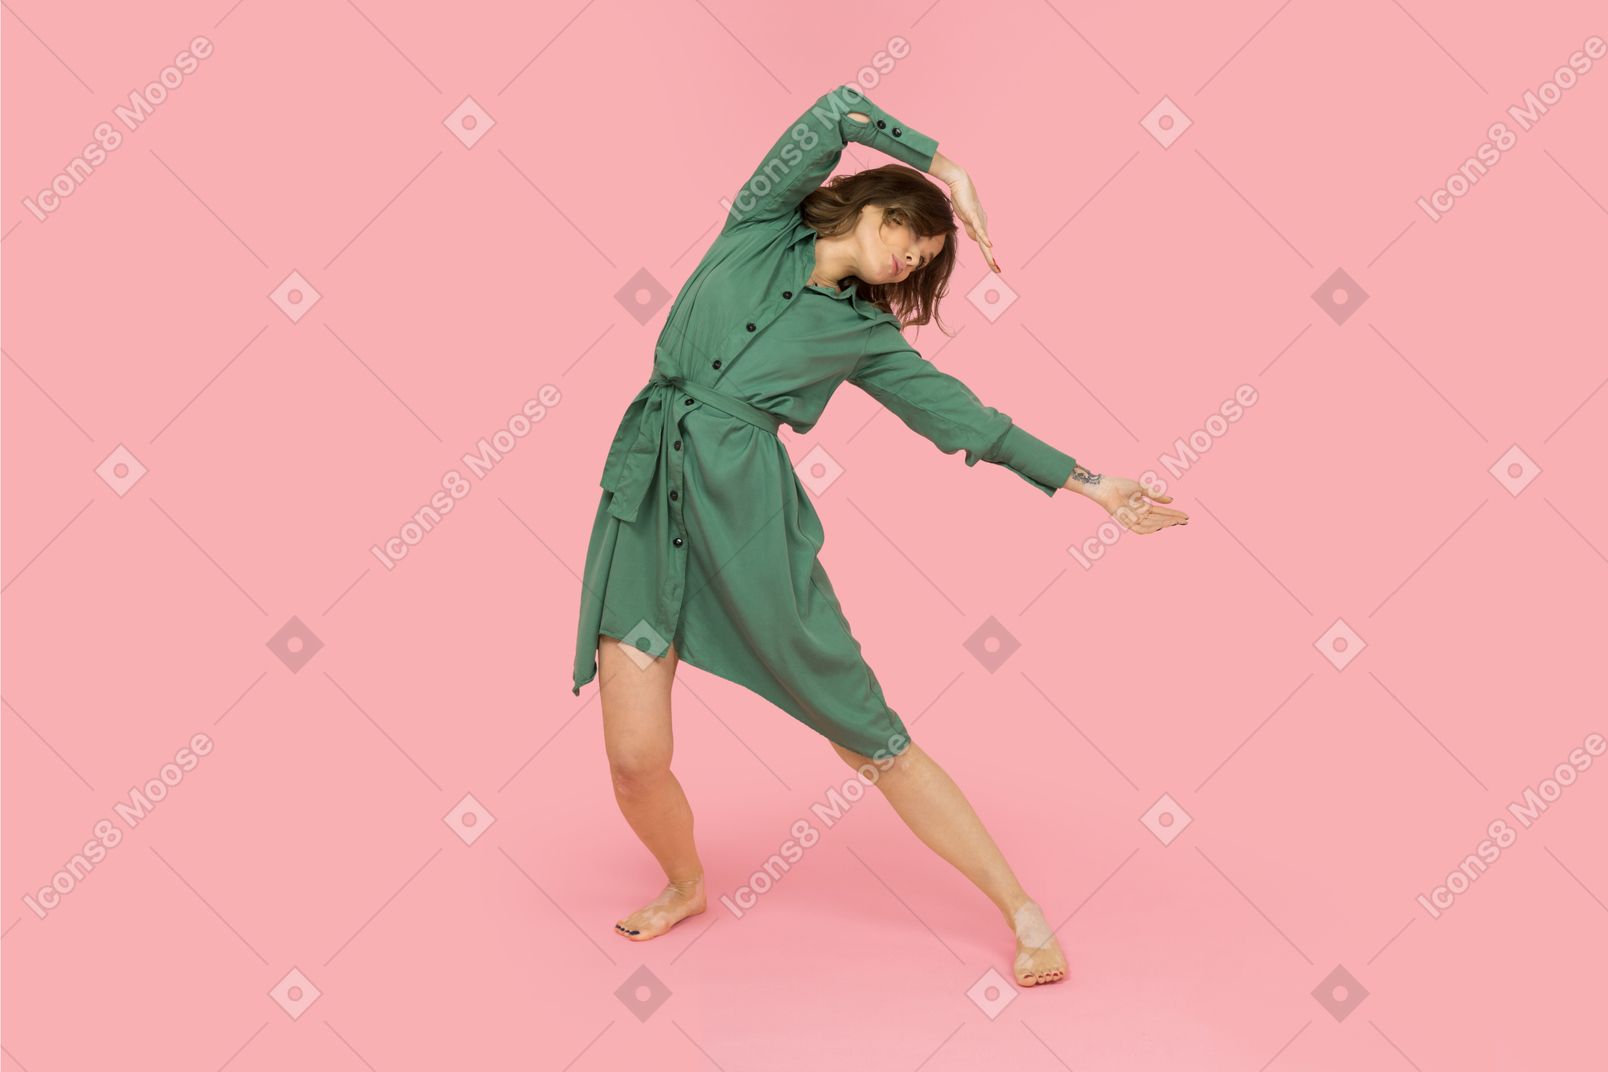 Femme en robe verte dansant seule